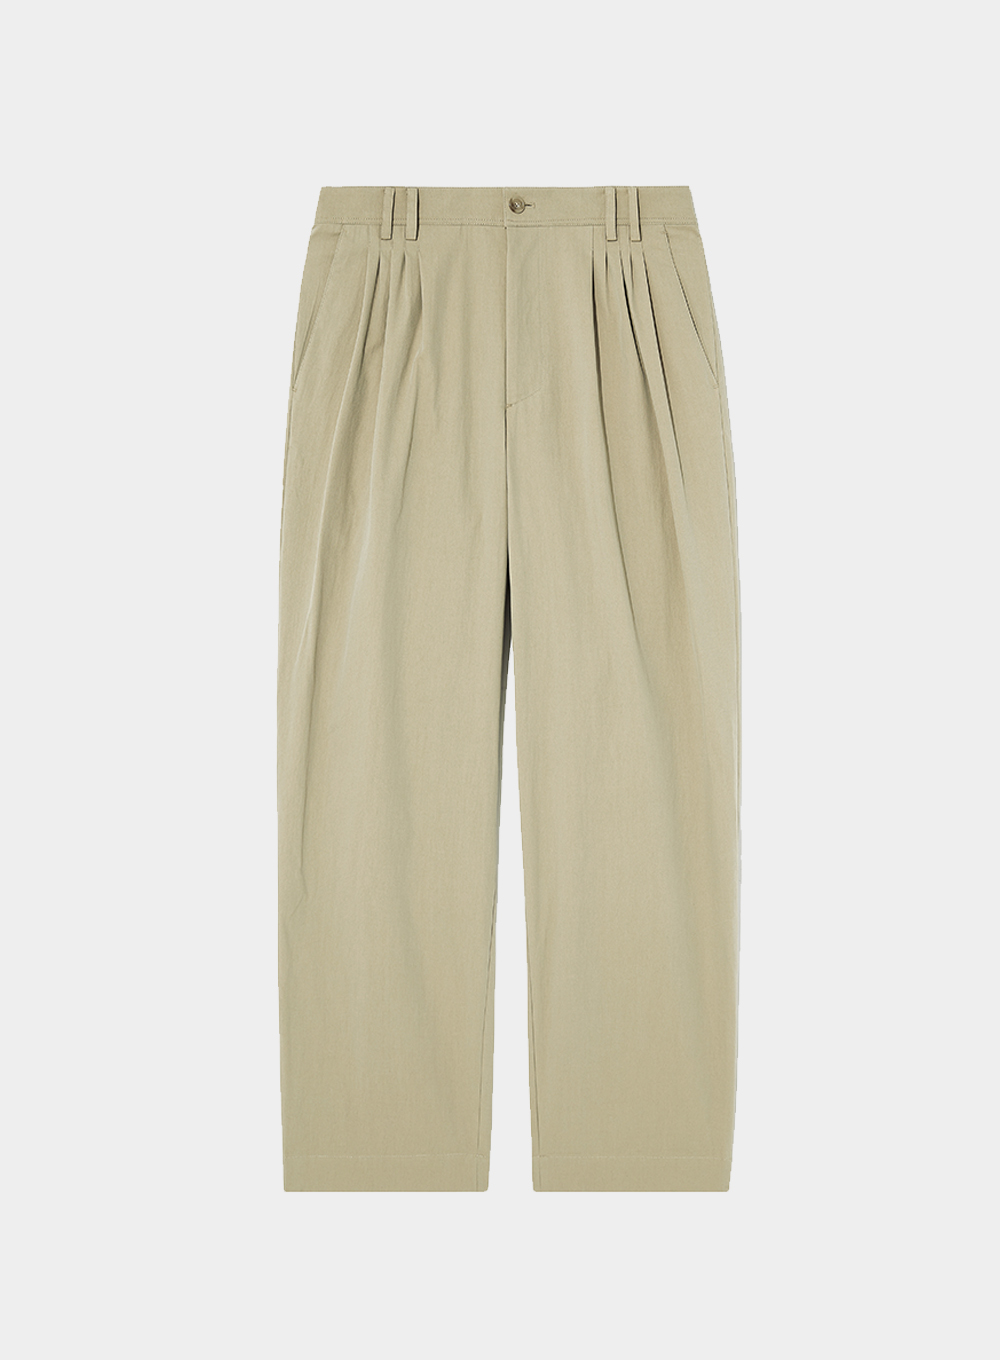 Essential Five Tuck Pleats Pants - Olive Khaki